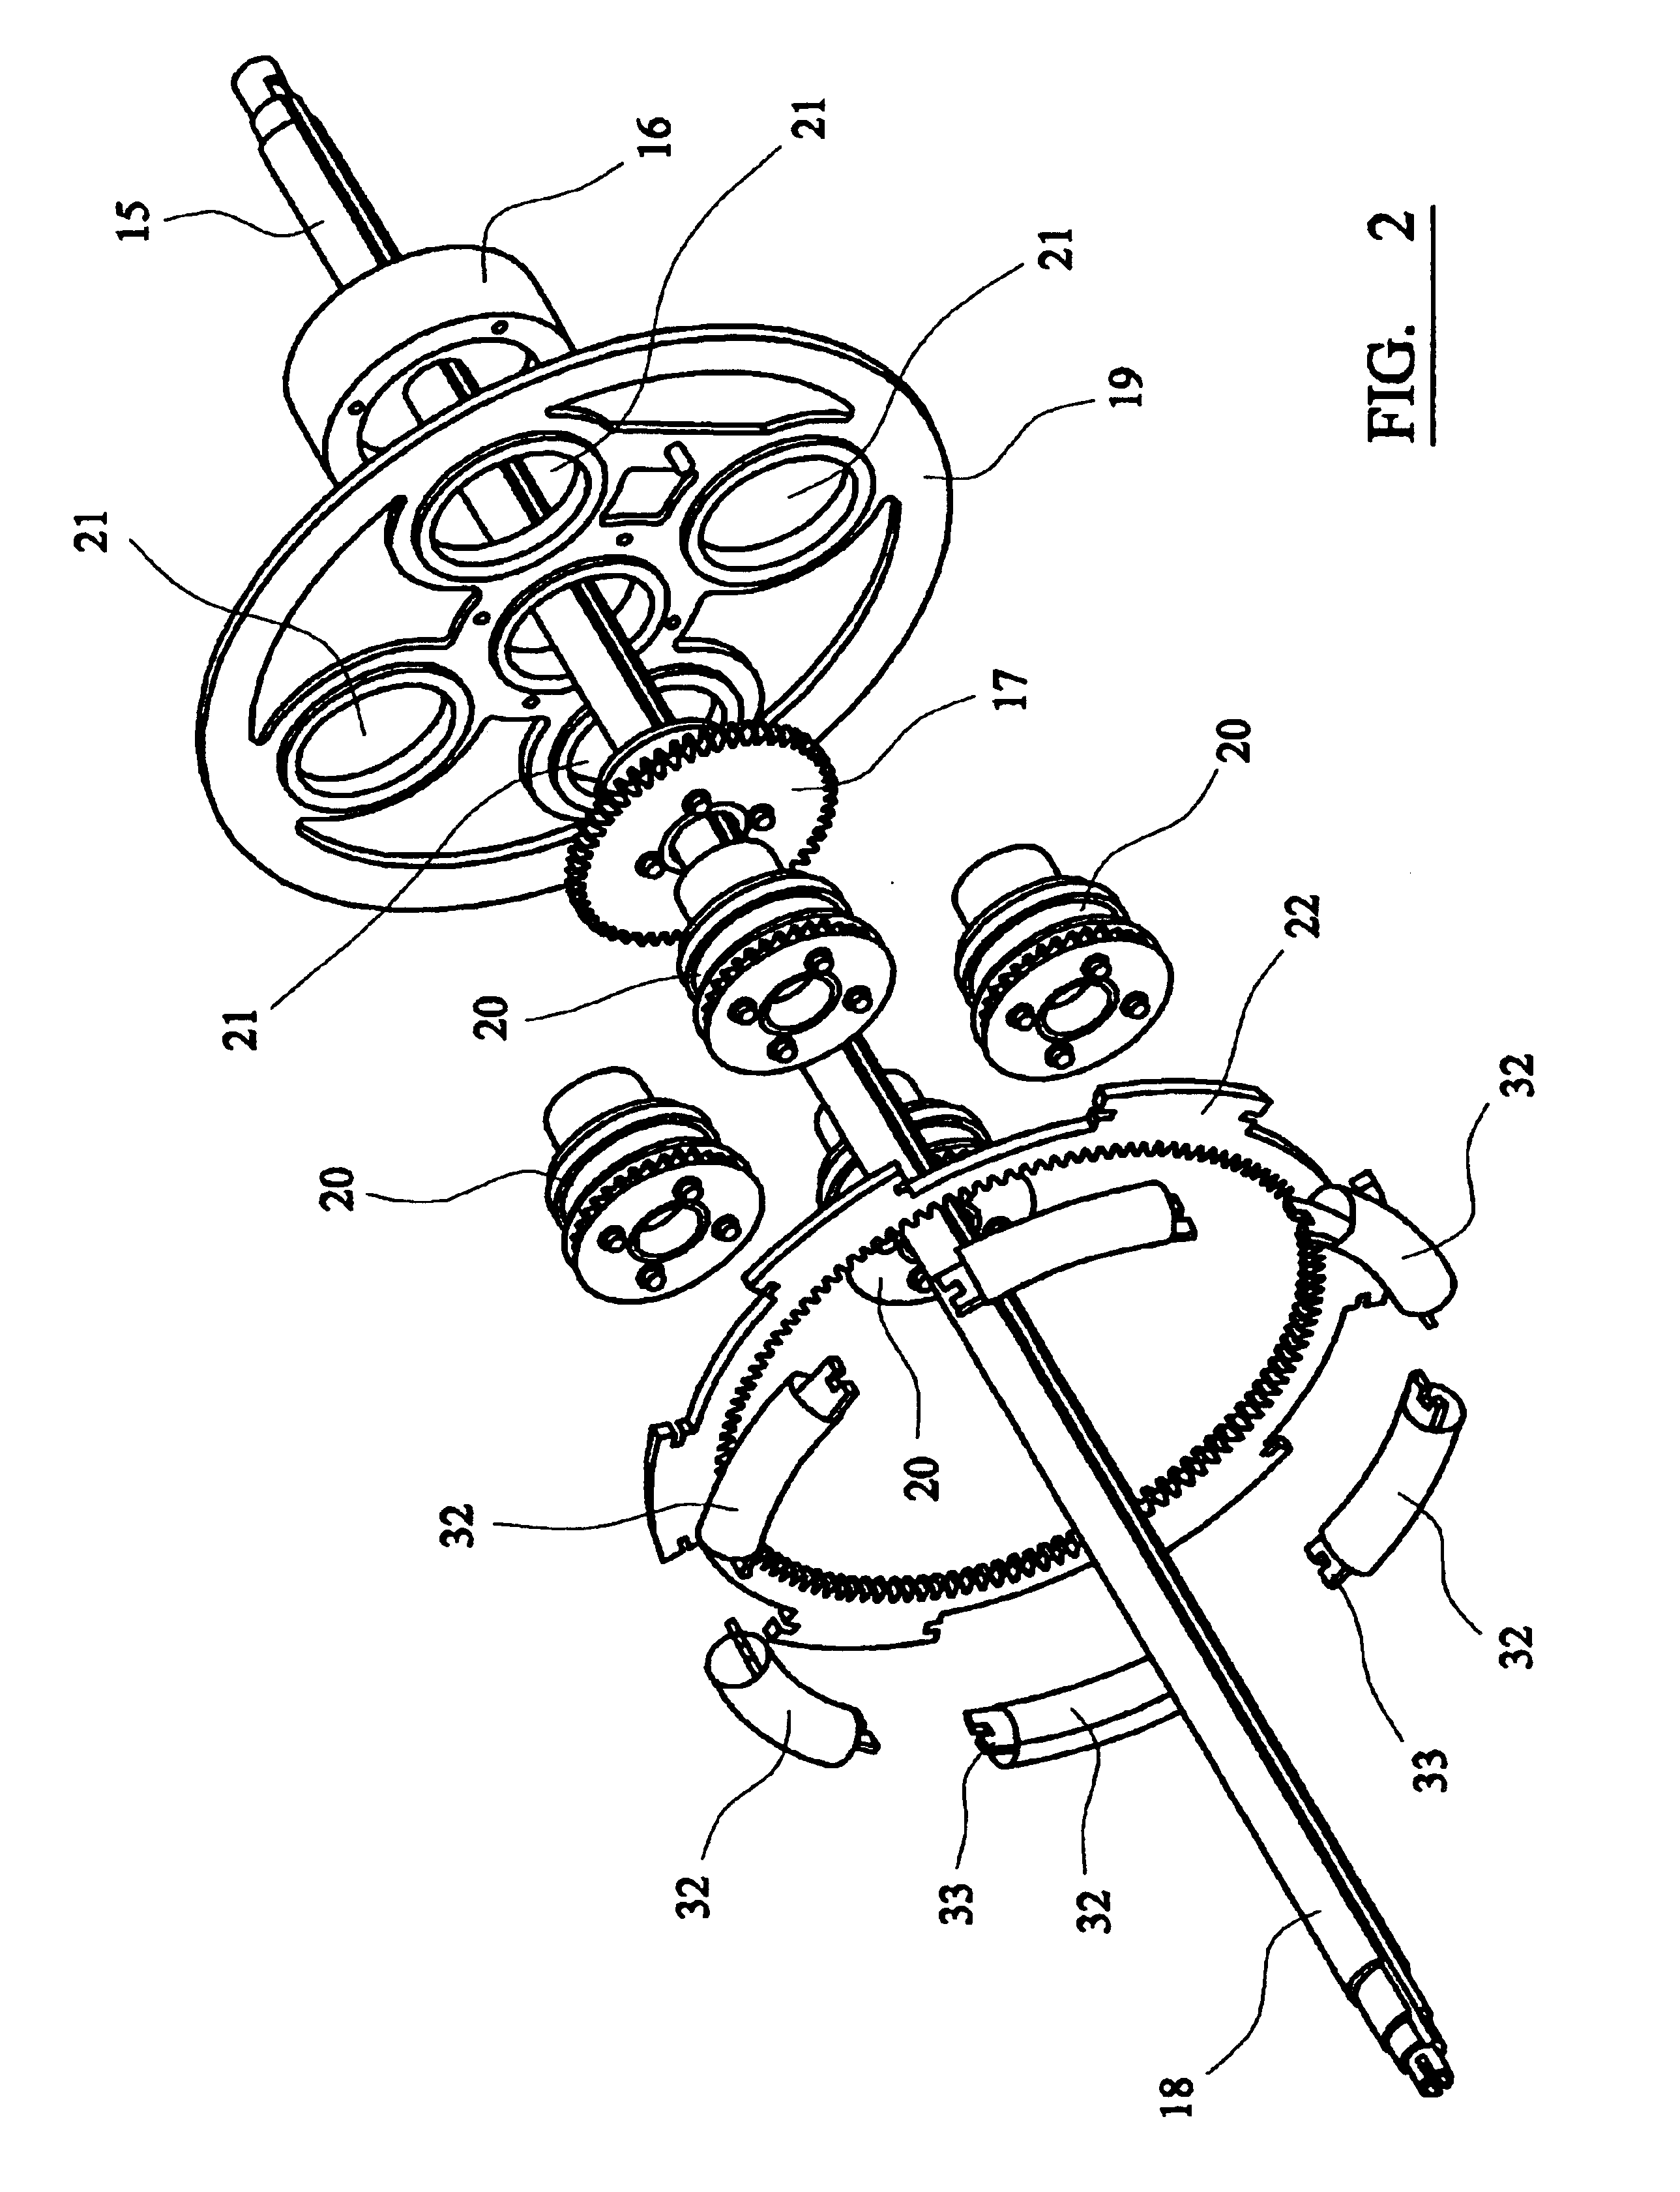 Fluid treatment apparatus